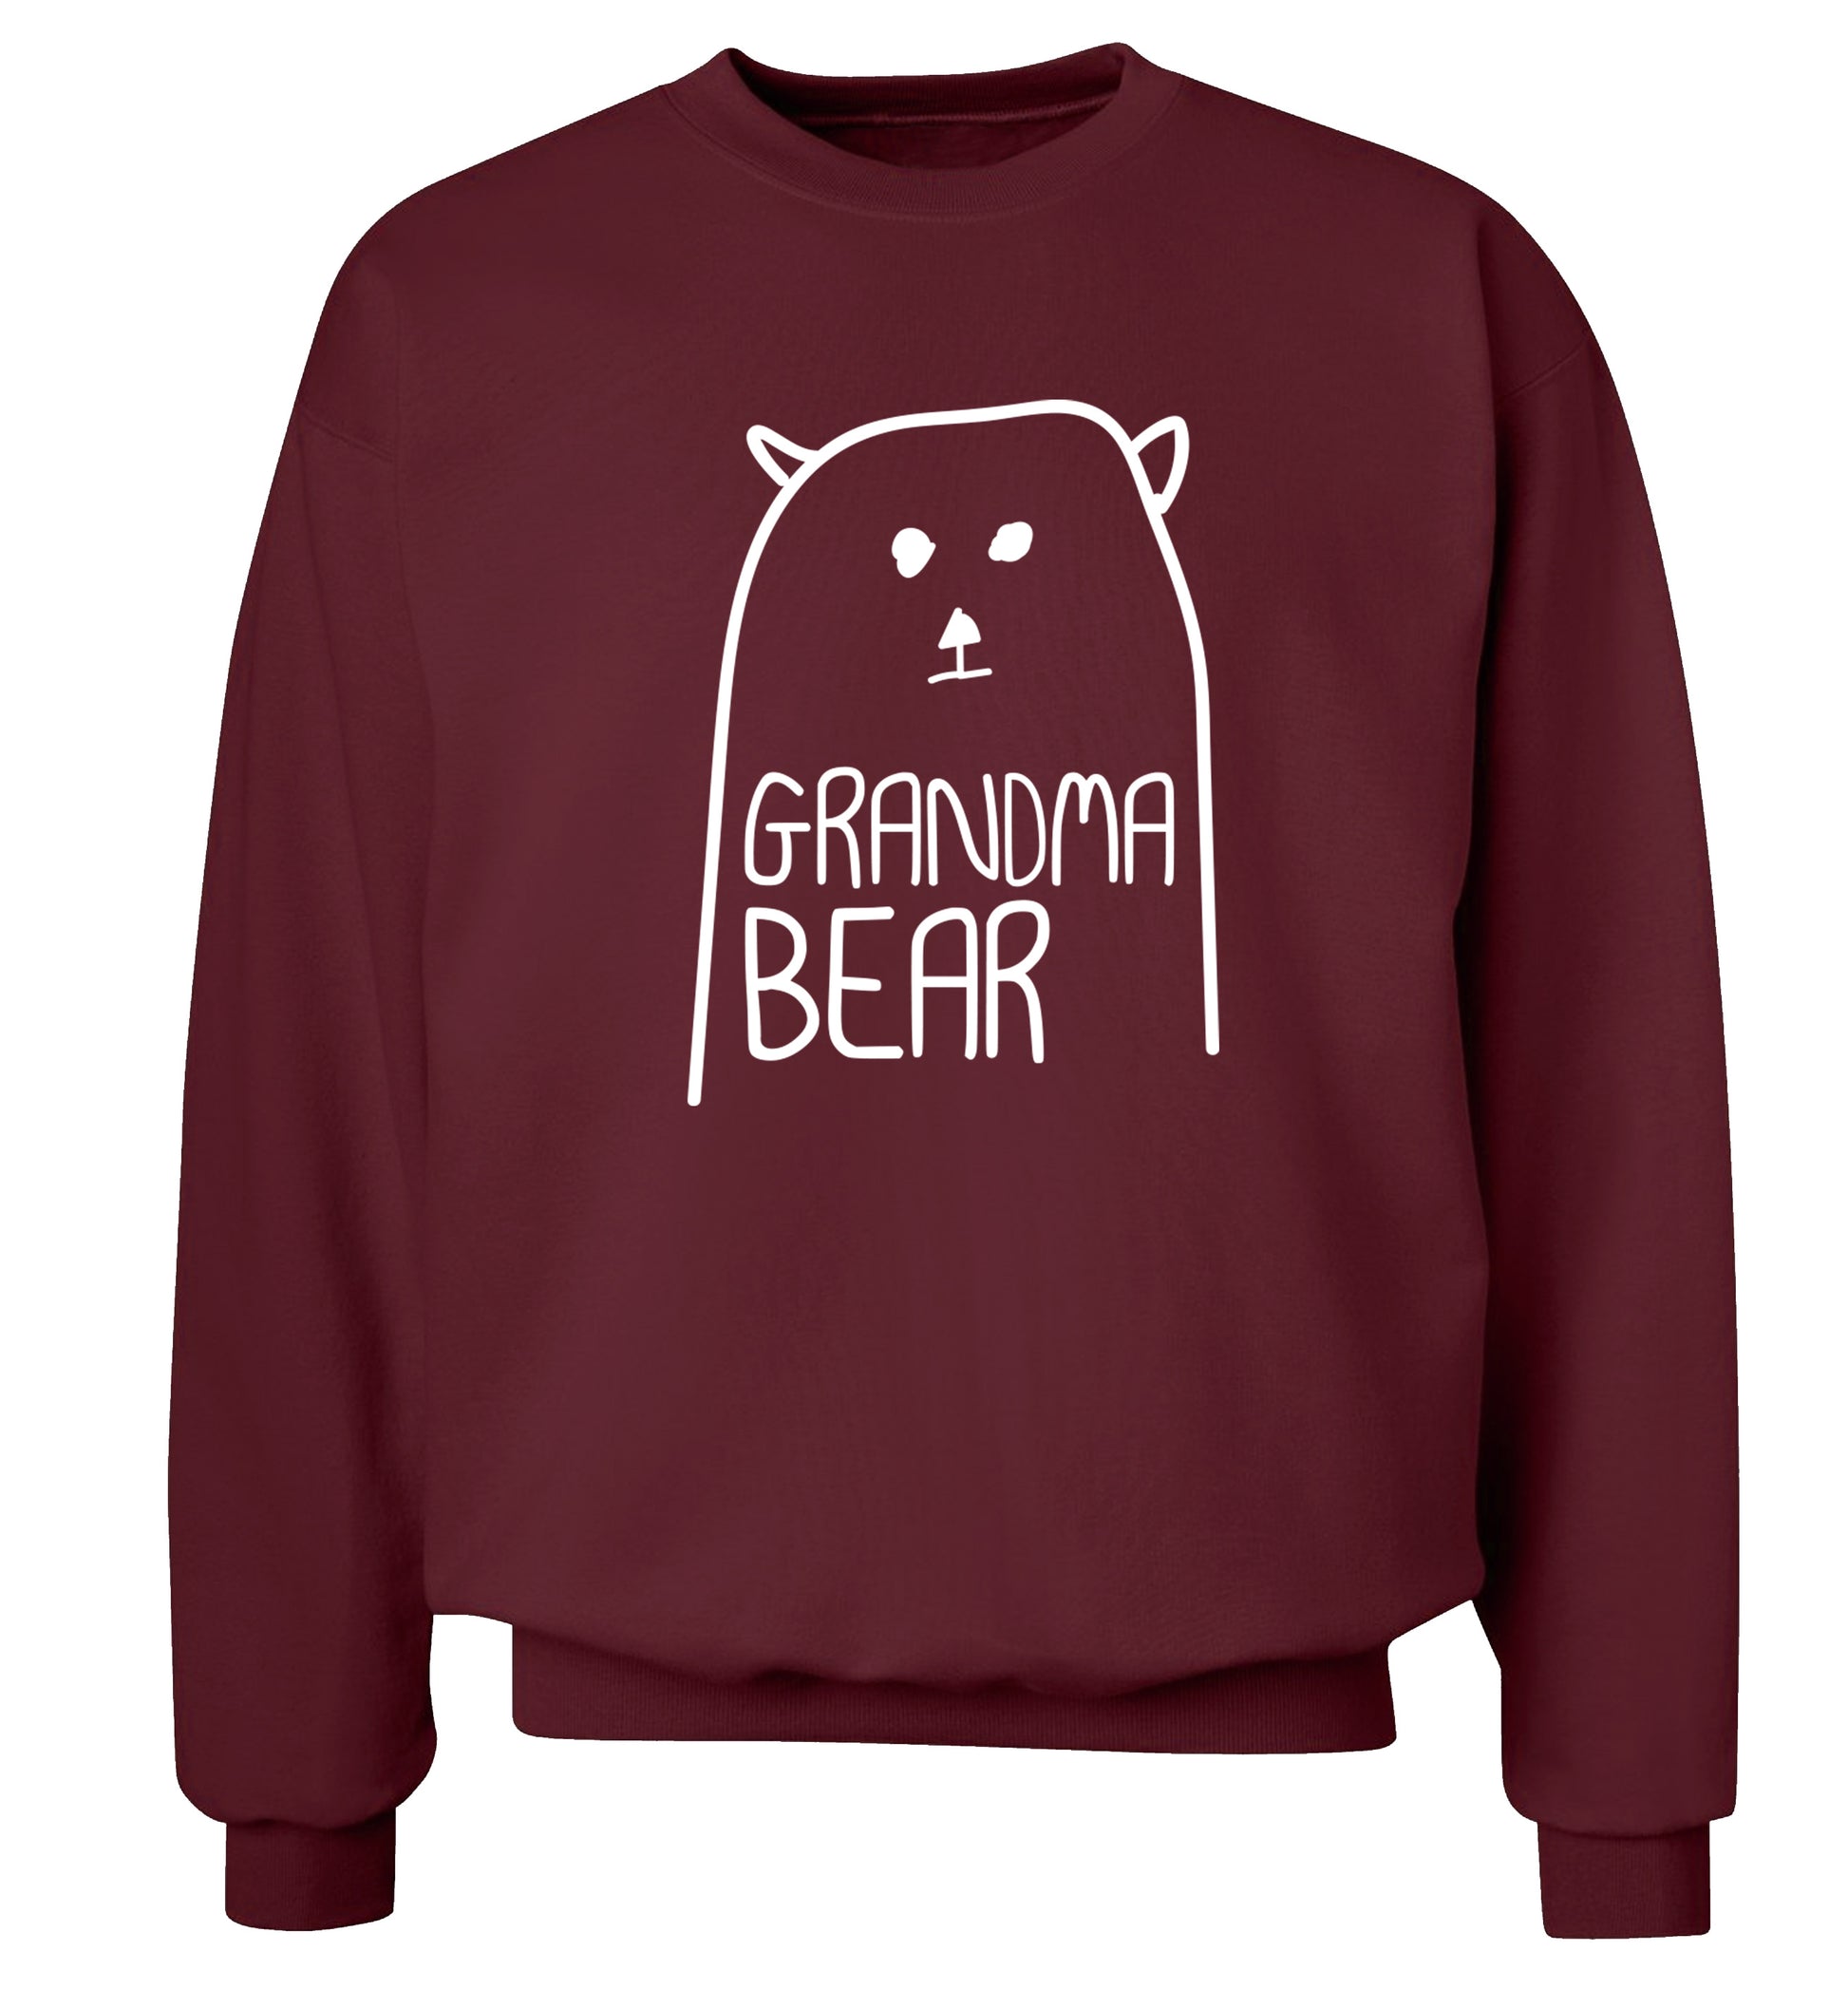 Grandma bear Adult's unisex maroon Sweater 2XL